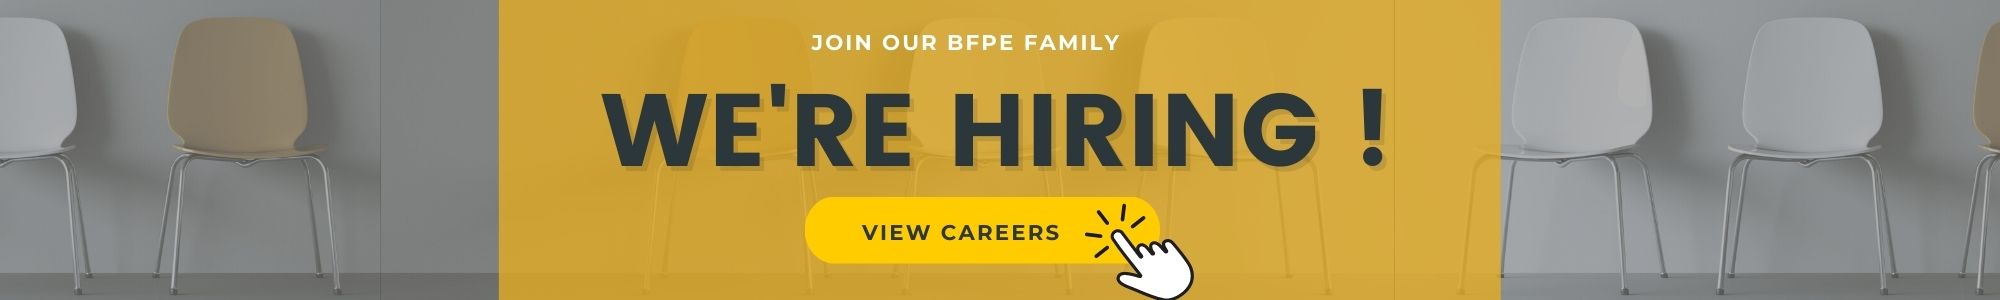 BFPE Career Poster